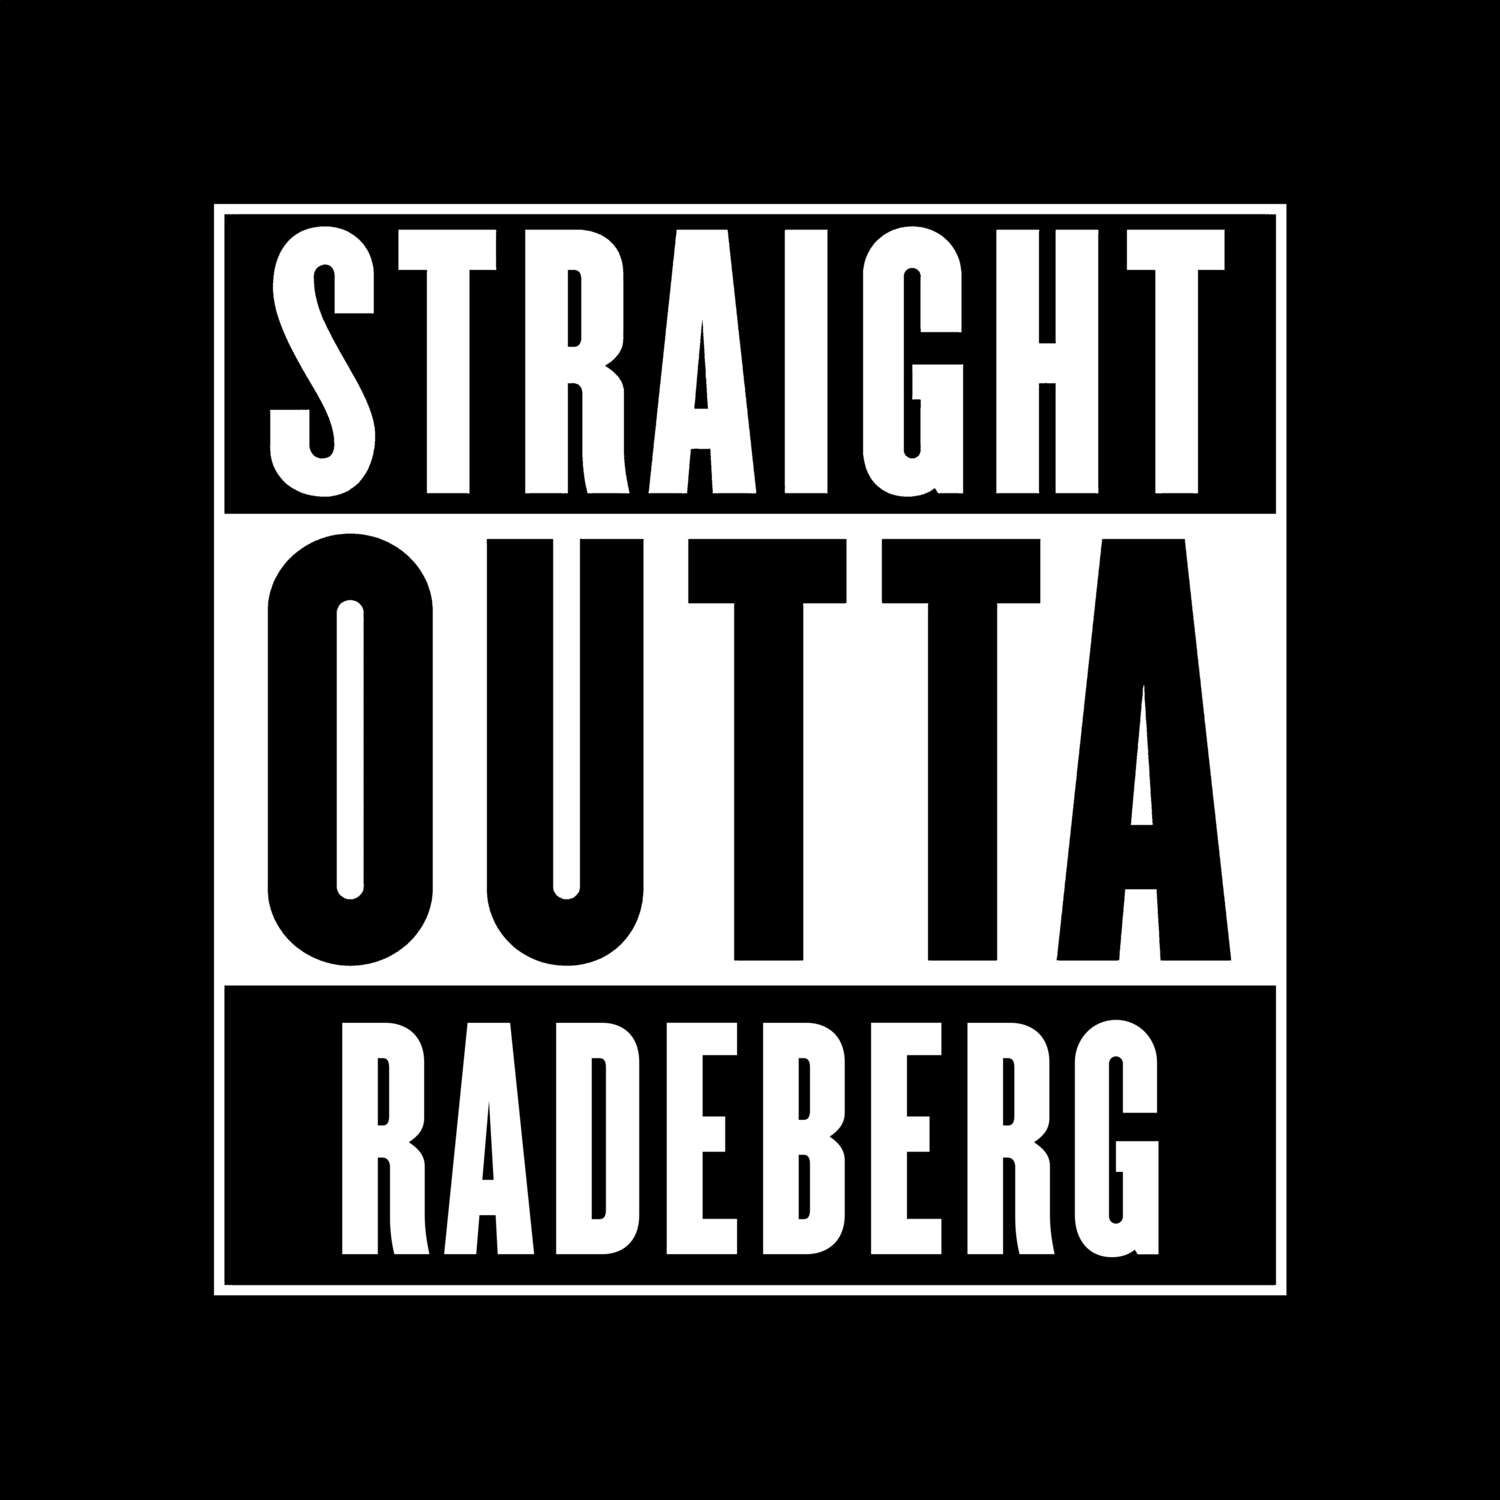 Radeberg T-Shirt »Straight Outta«